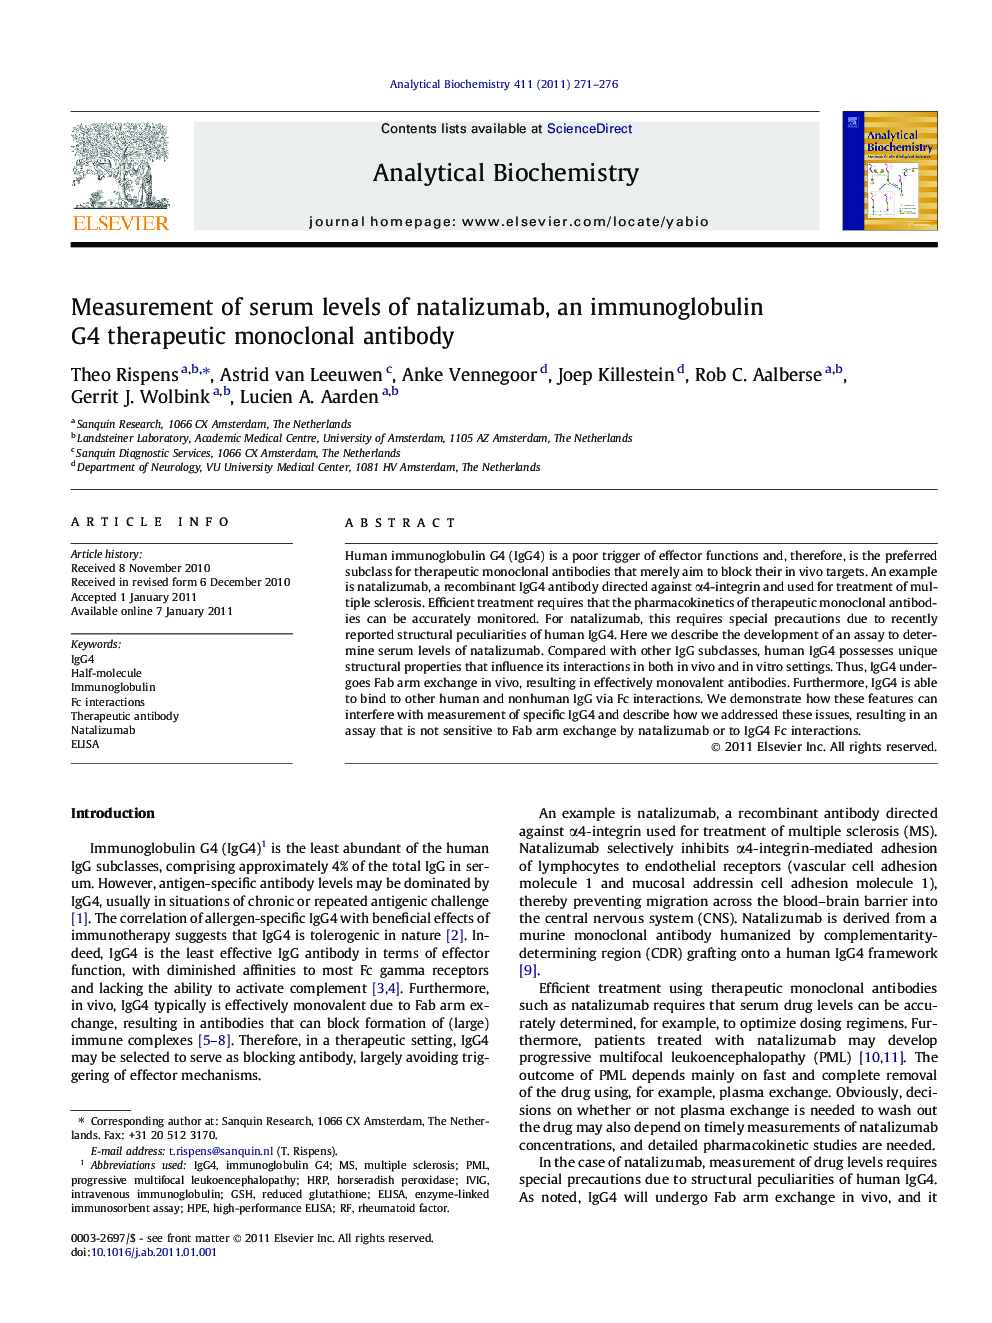 Measurement of serum levels of natalizumab, an immunoglobulin G4 therapeutic monoclonal antibody